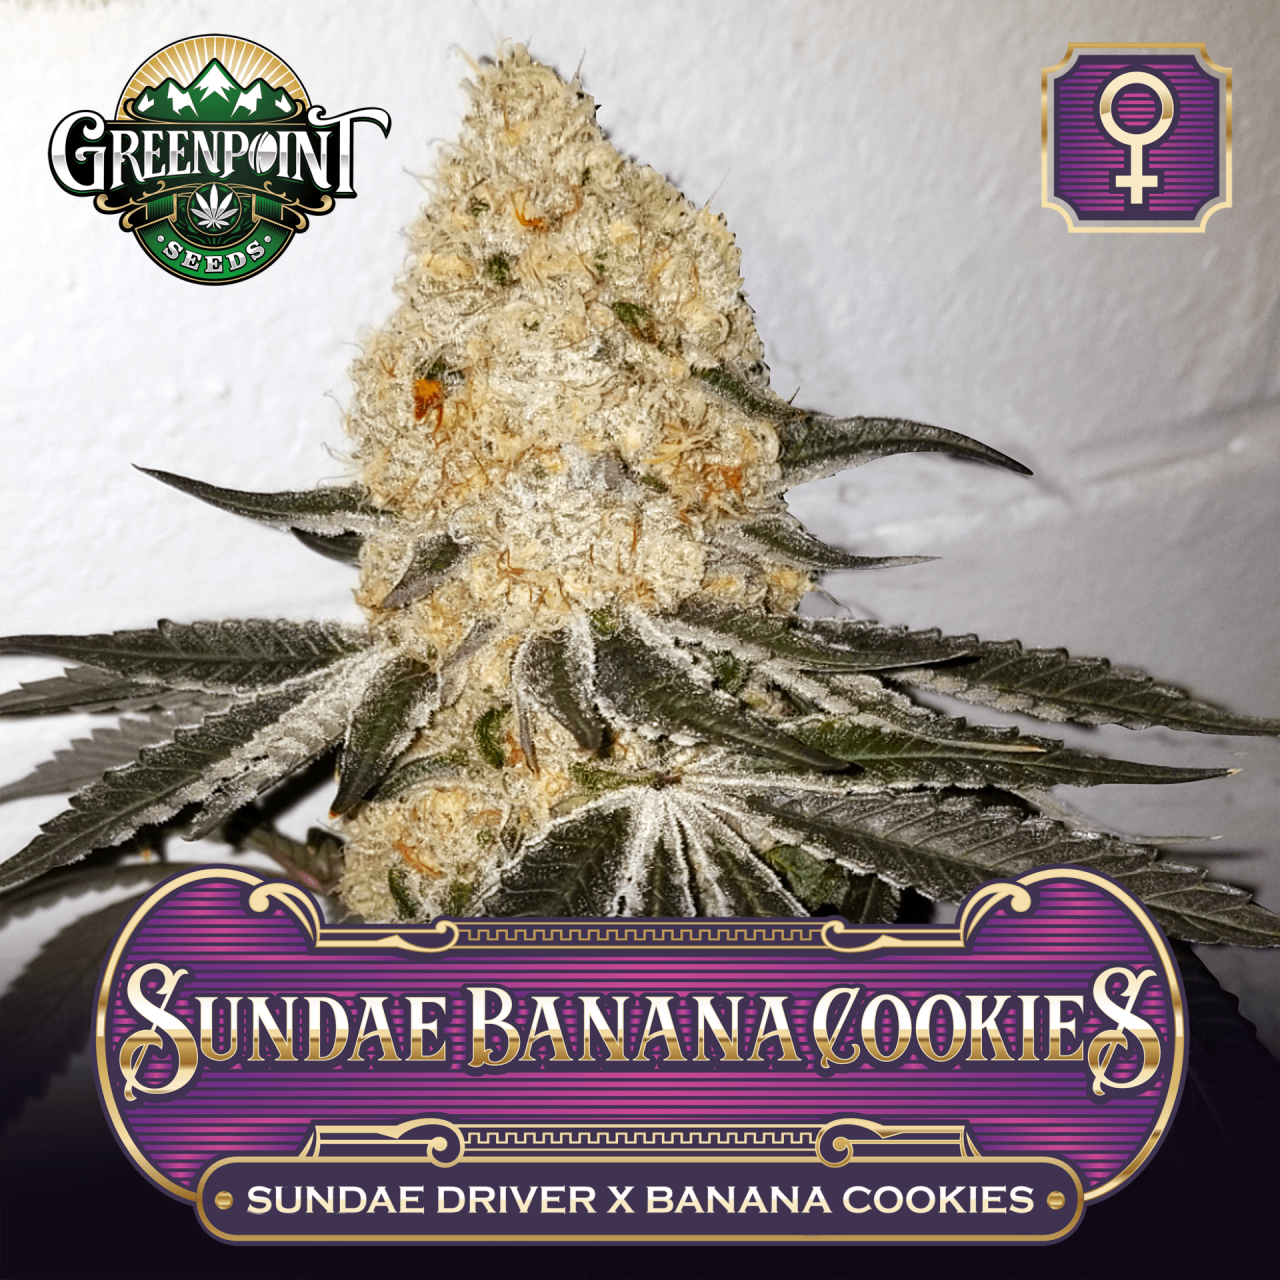 sundae-banana-cookies-feminized-seeds-greenpointseeds.com-c.png